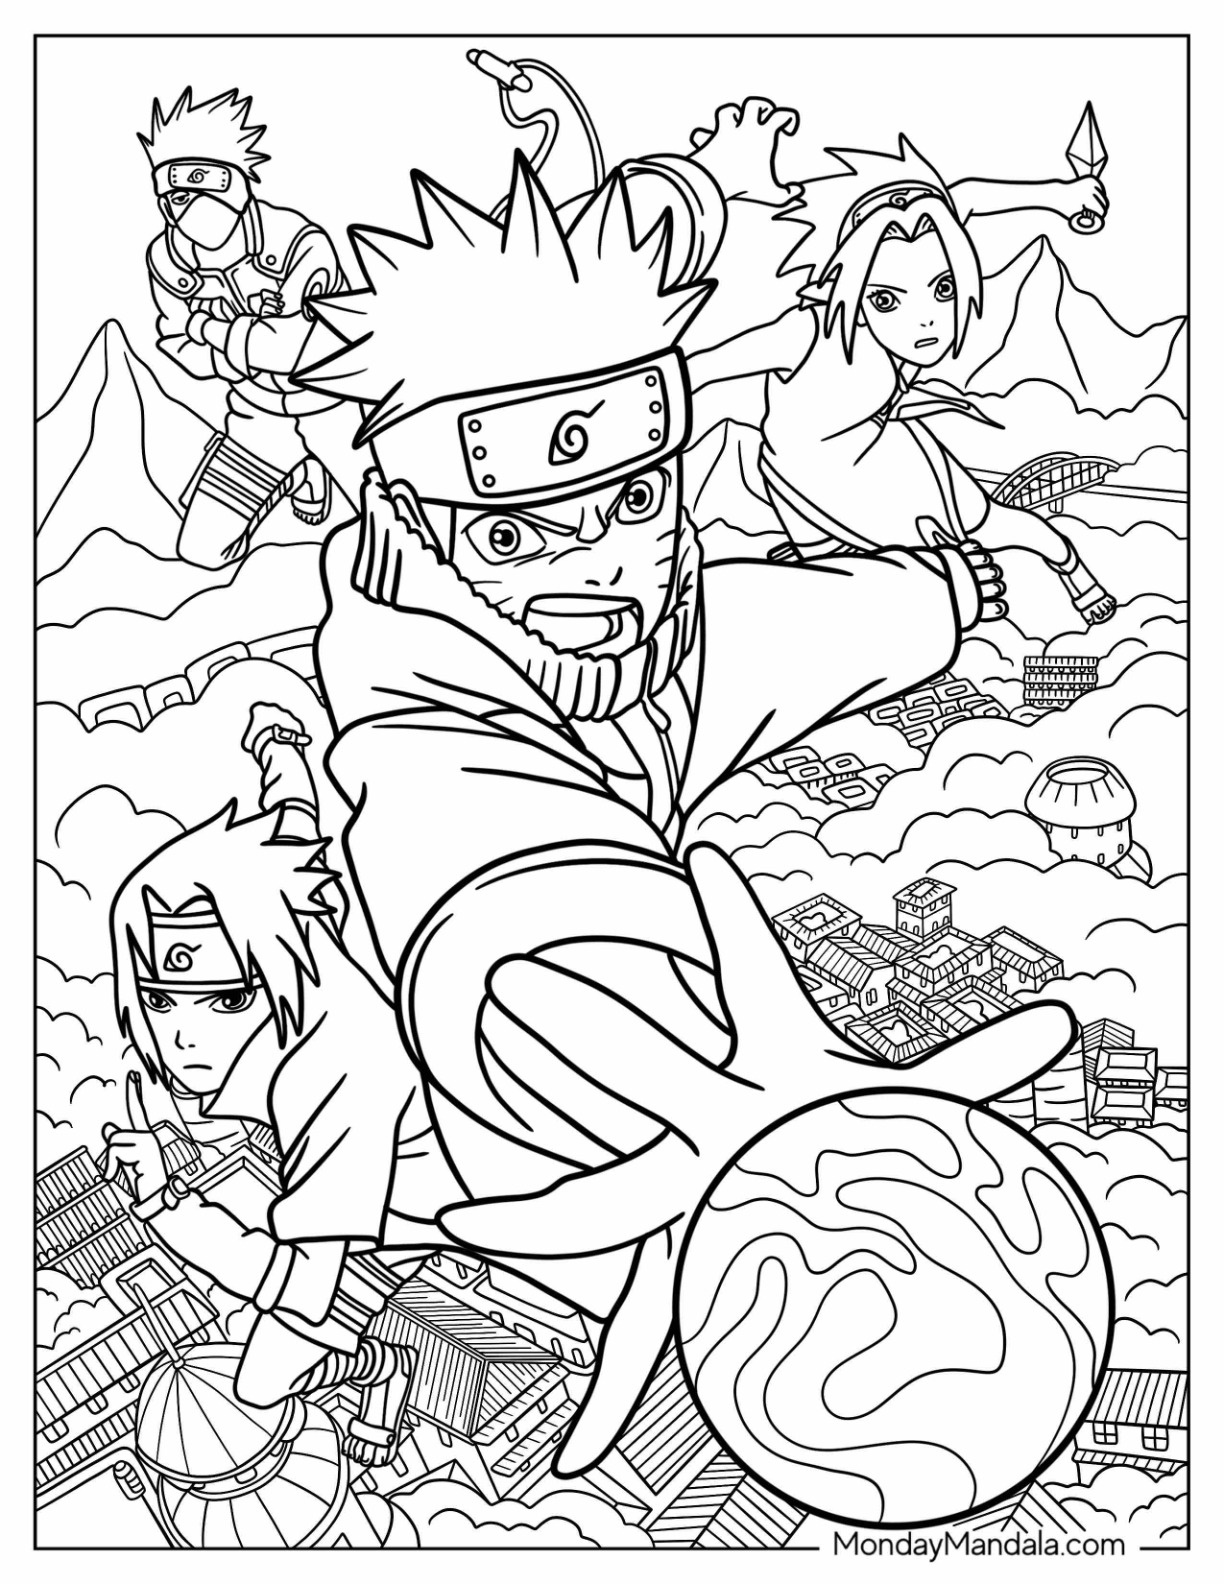 Naruto coloring pages free pdf printables